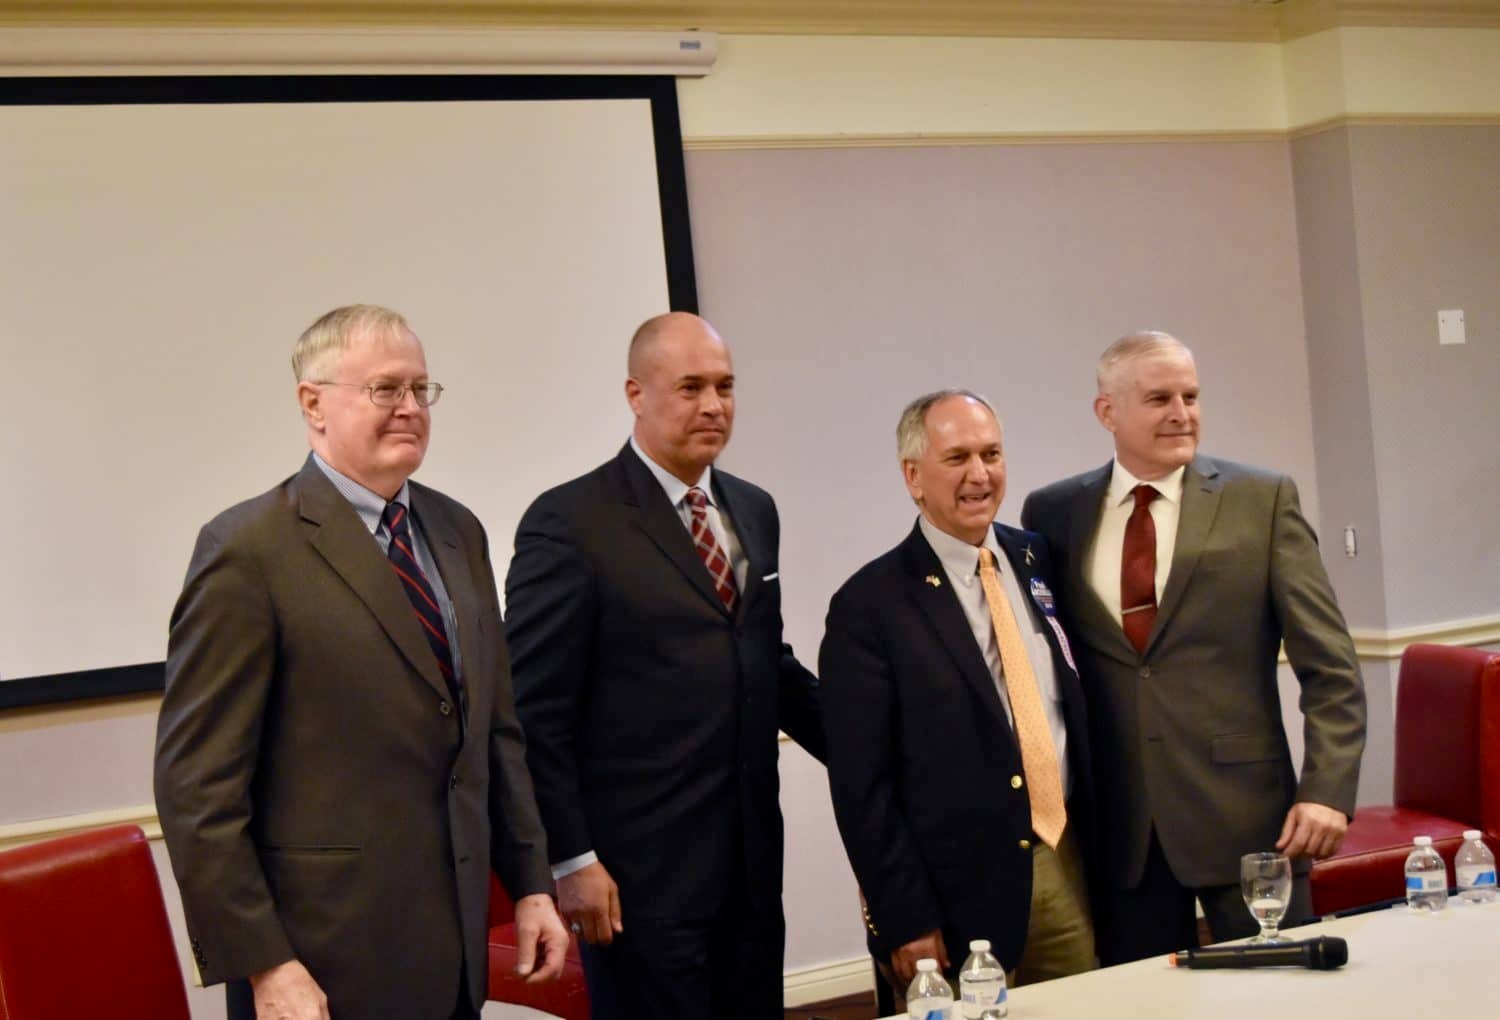 Rhode Island News: First gubernatorial debate of 2018 missing some candidates